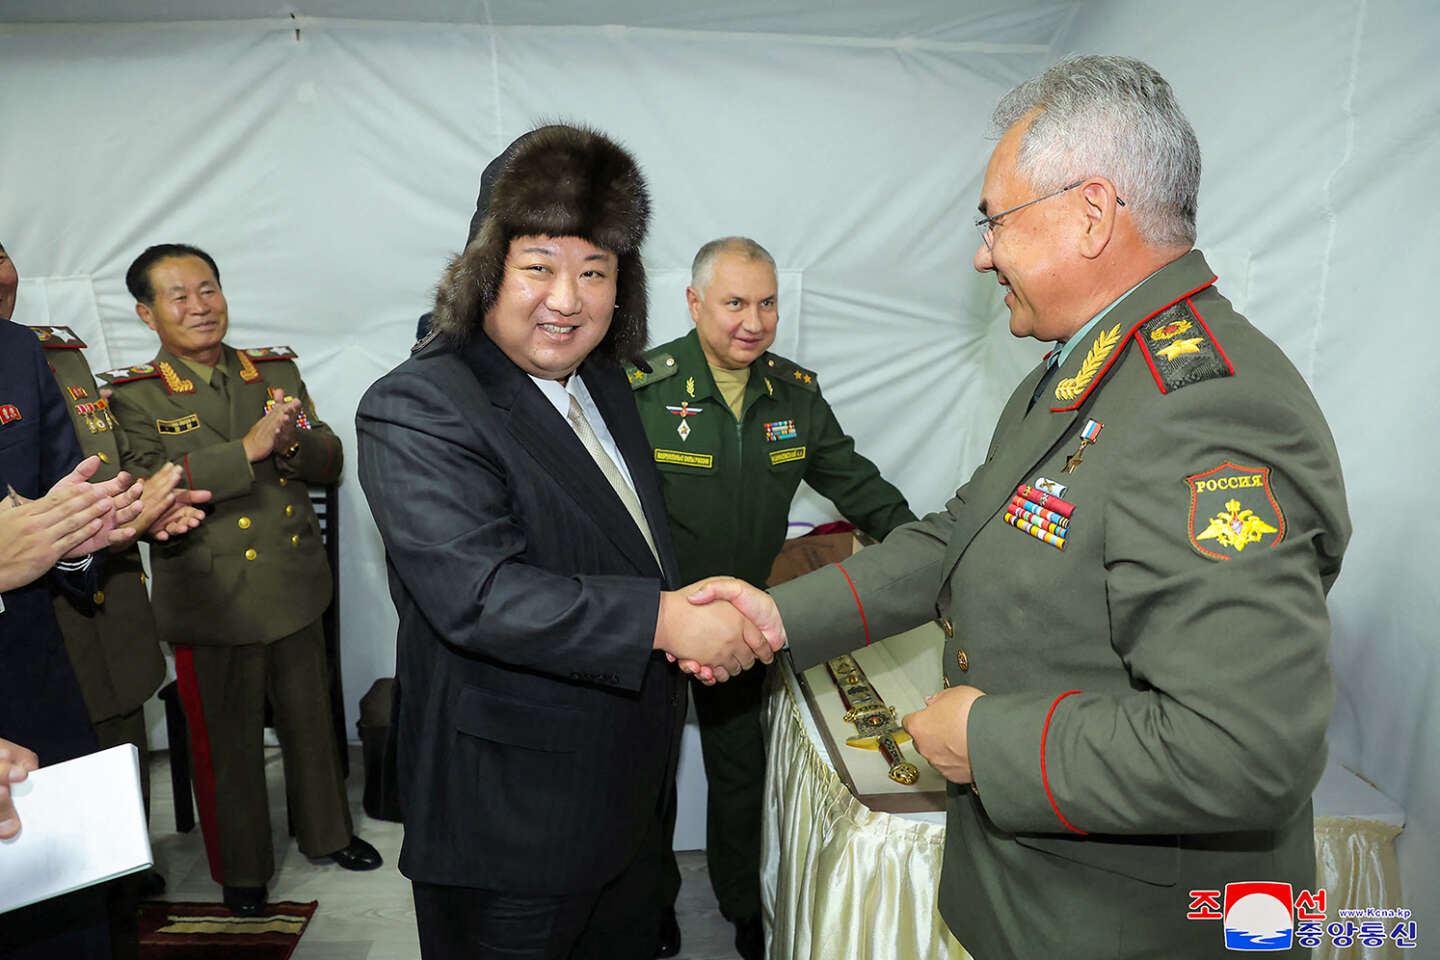 Kim Jong Un wore a ushanka in Vladivostok. Does anyone care?